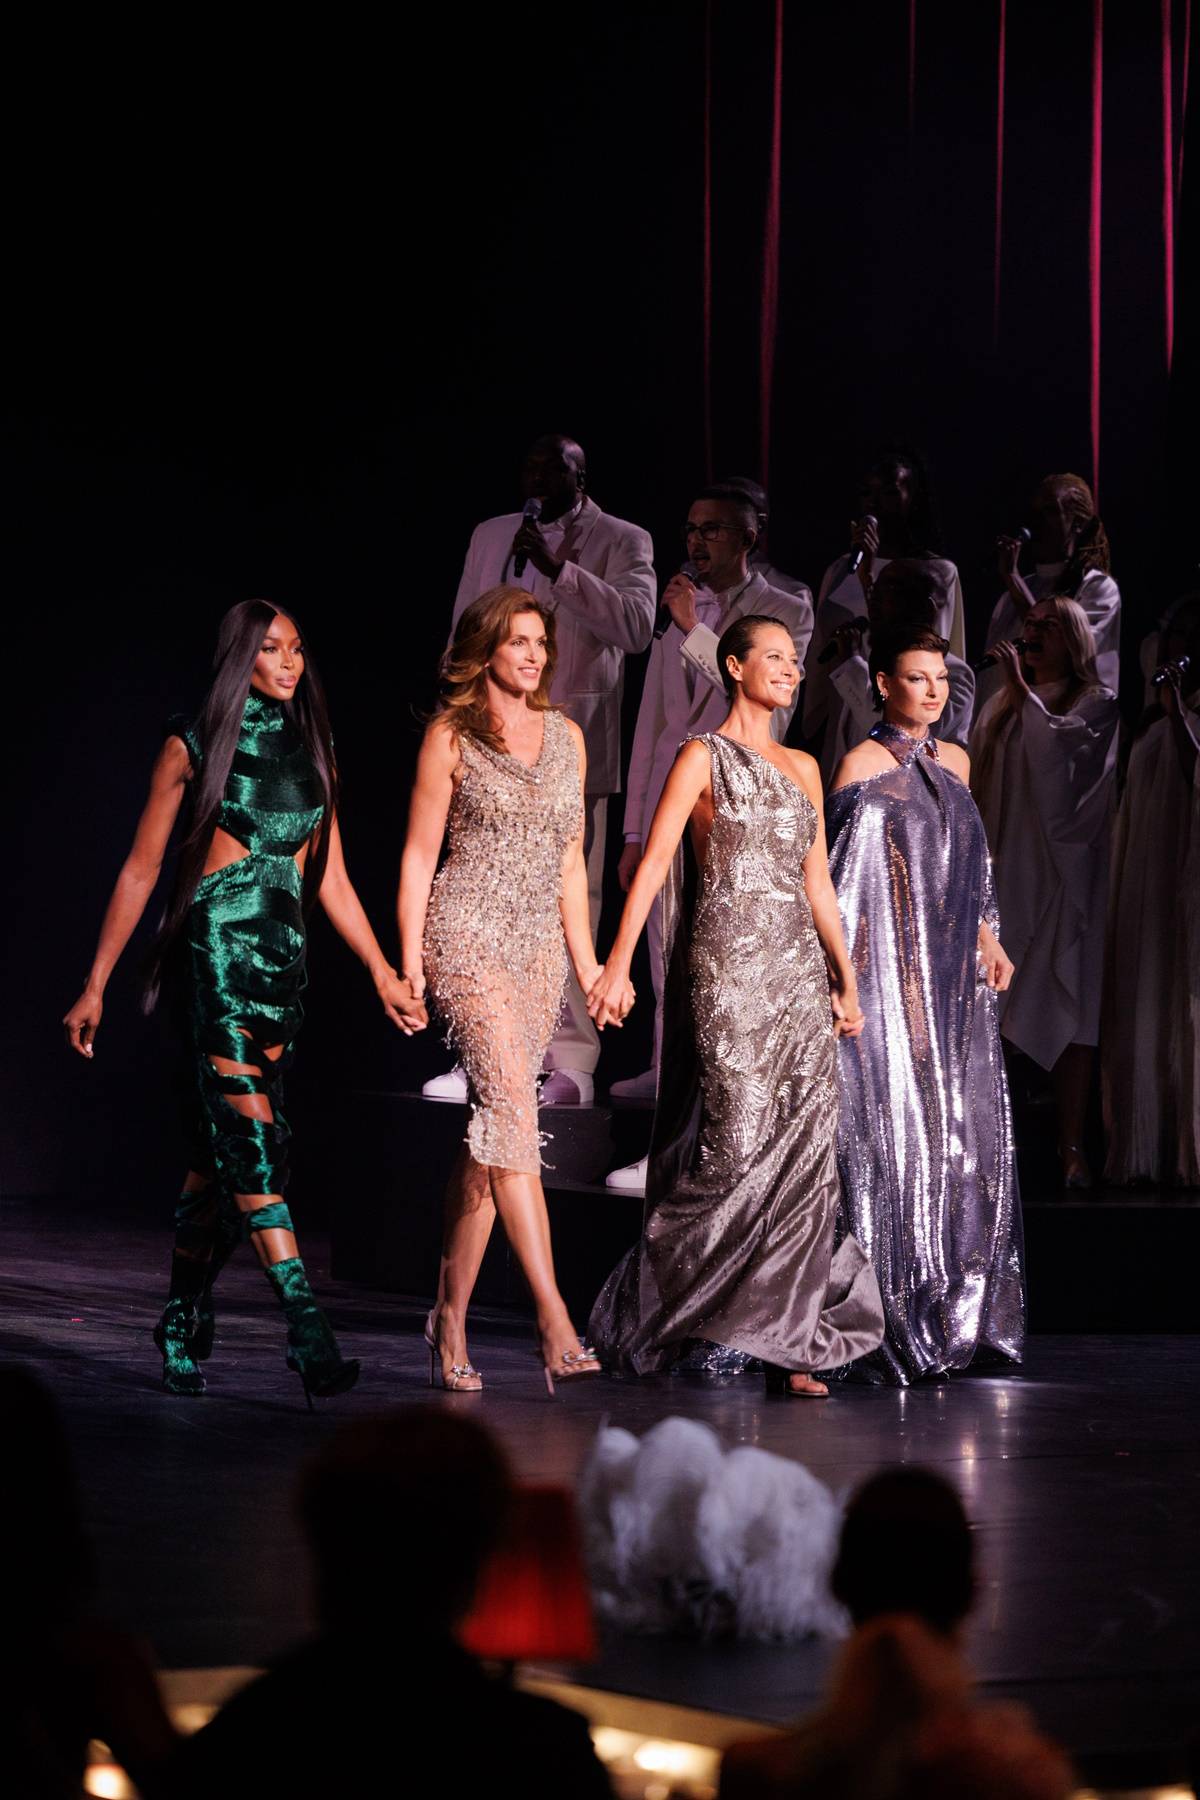 Supermodelki Cindy Crawford, Linda Evangelista i Naomi Campbell i Christy Turlington Burns wystąpiły na pokazie mody na „Vogue World: London”.